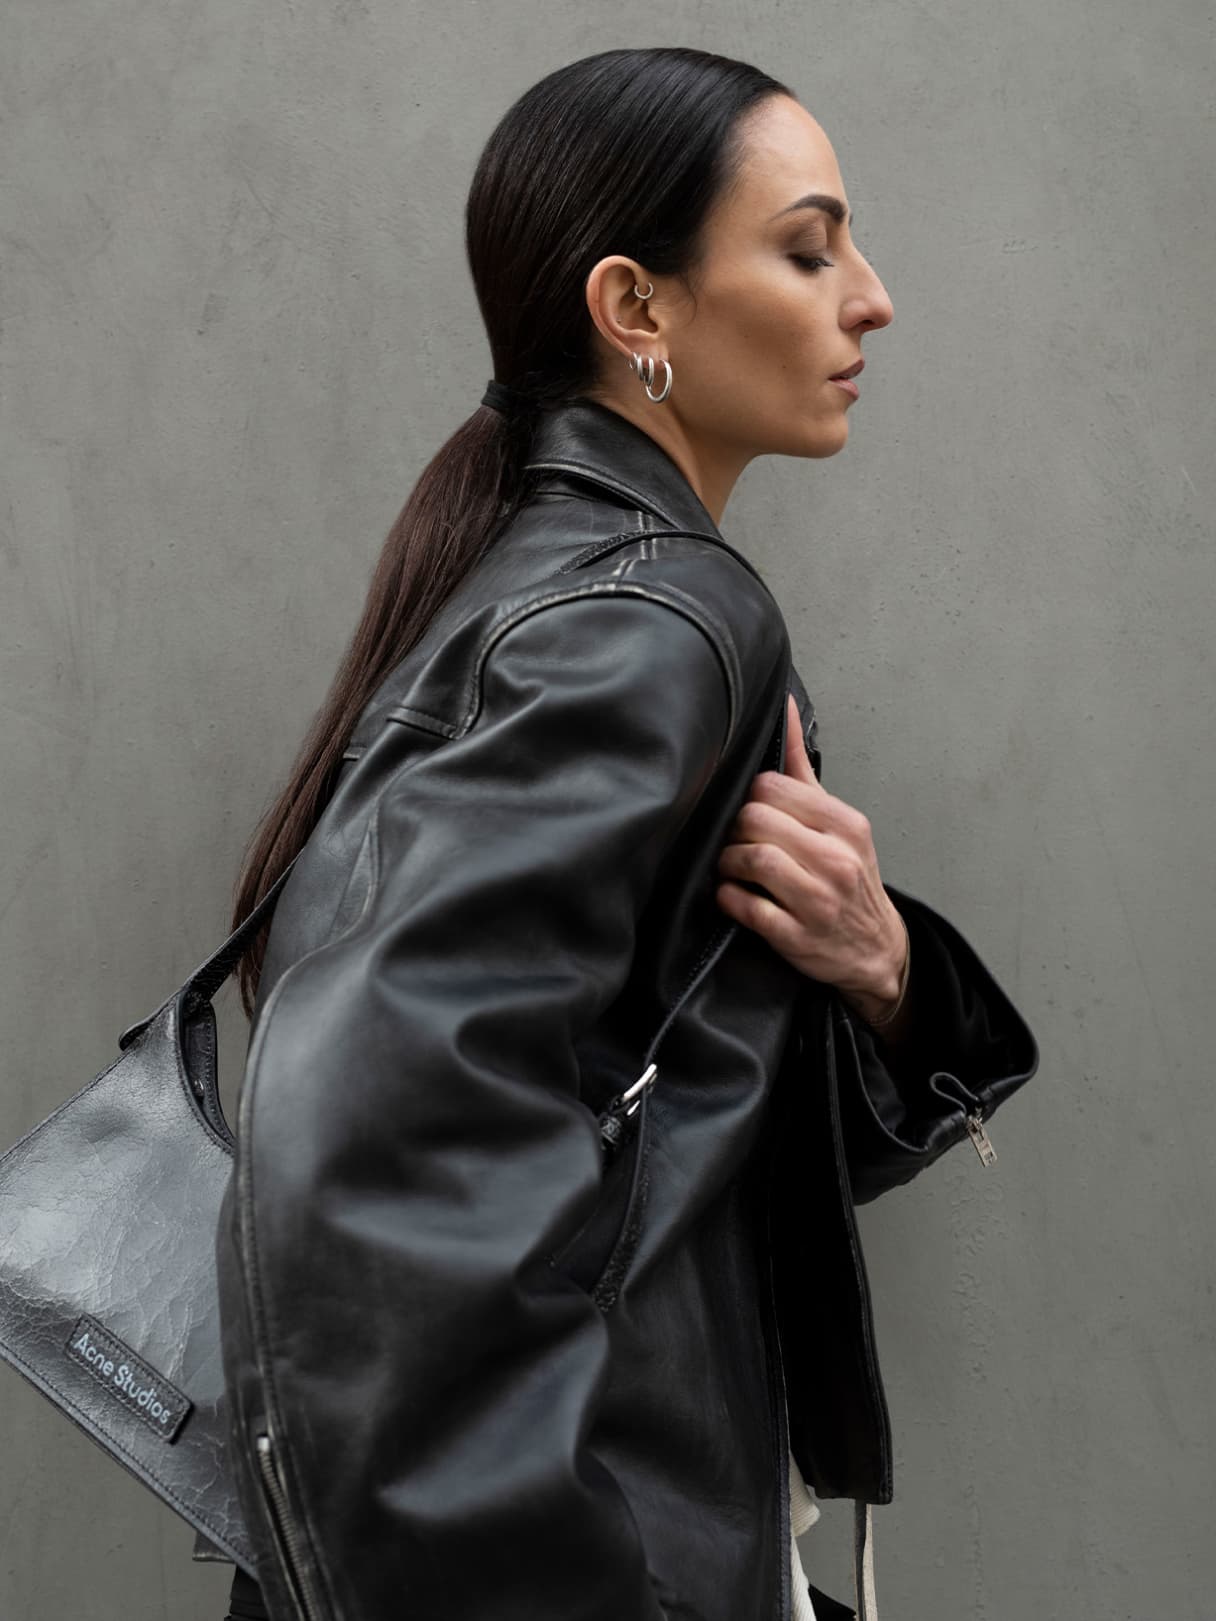 Female model with black Acne Studios bag